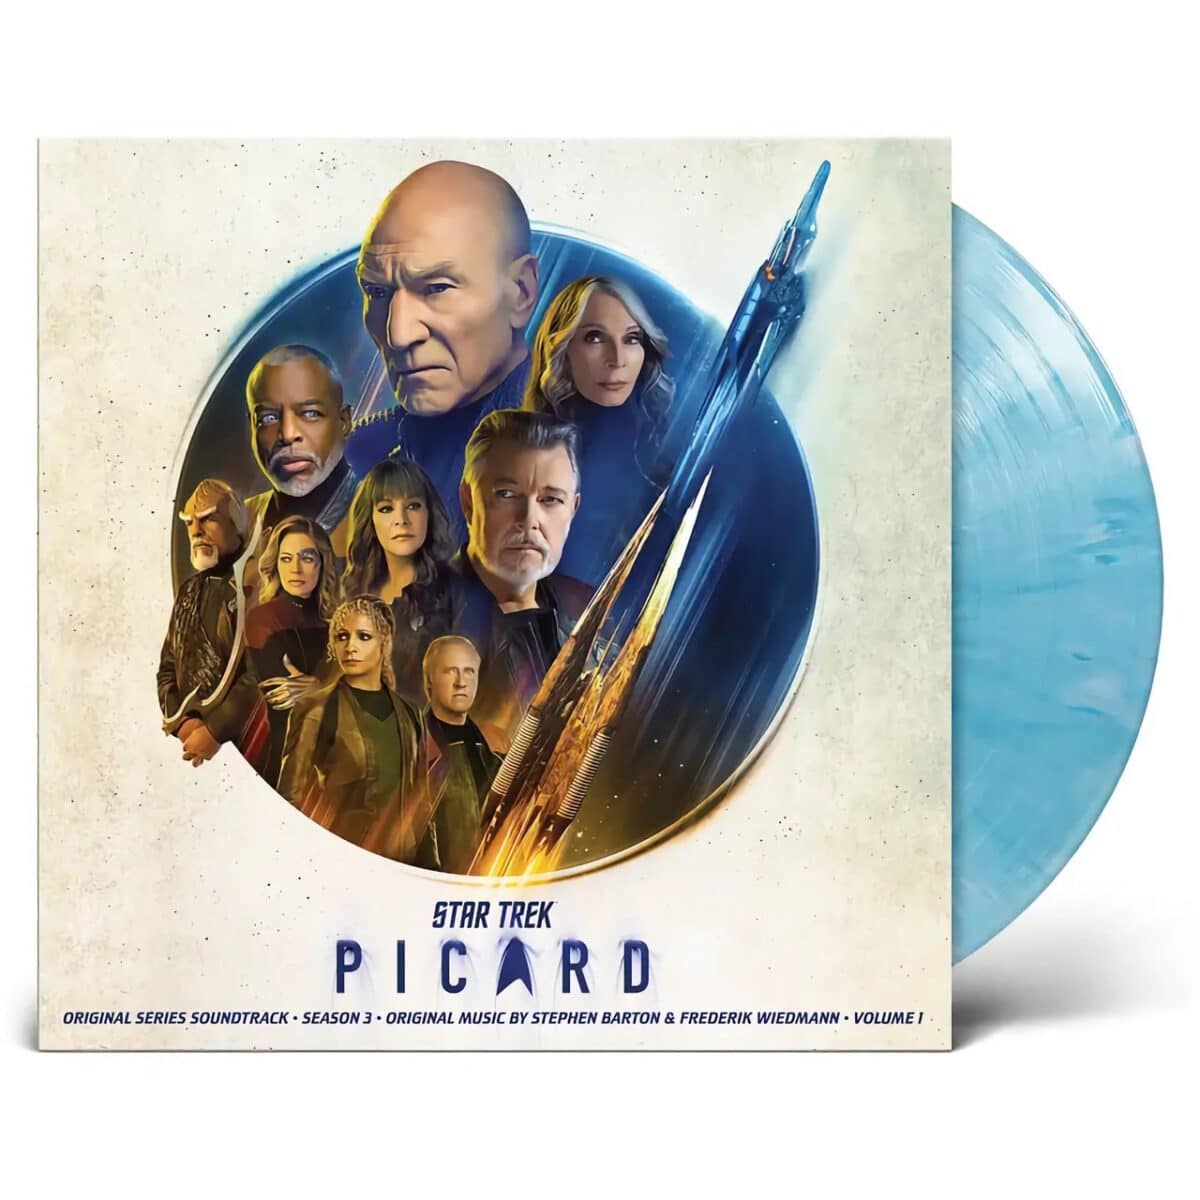 Star Trek Picard (Original Series Soundtrack - Season 3)